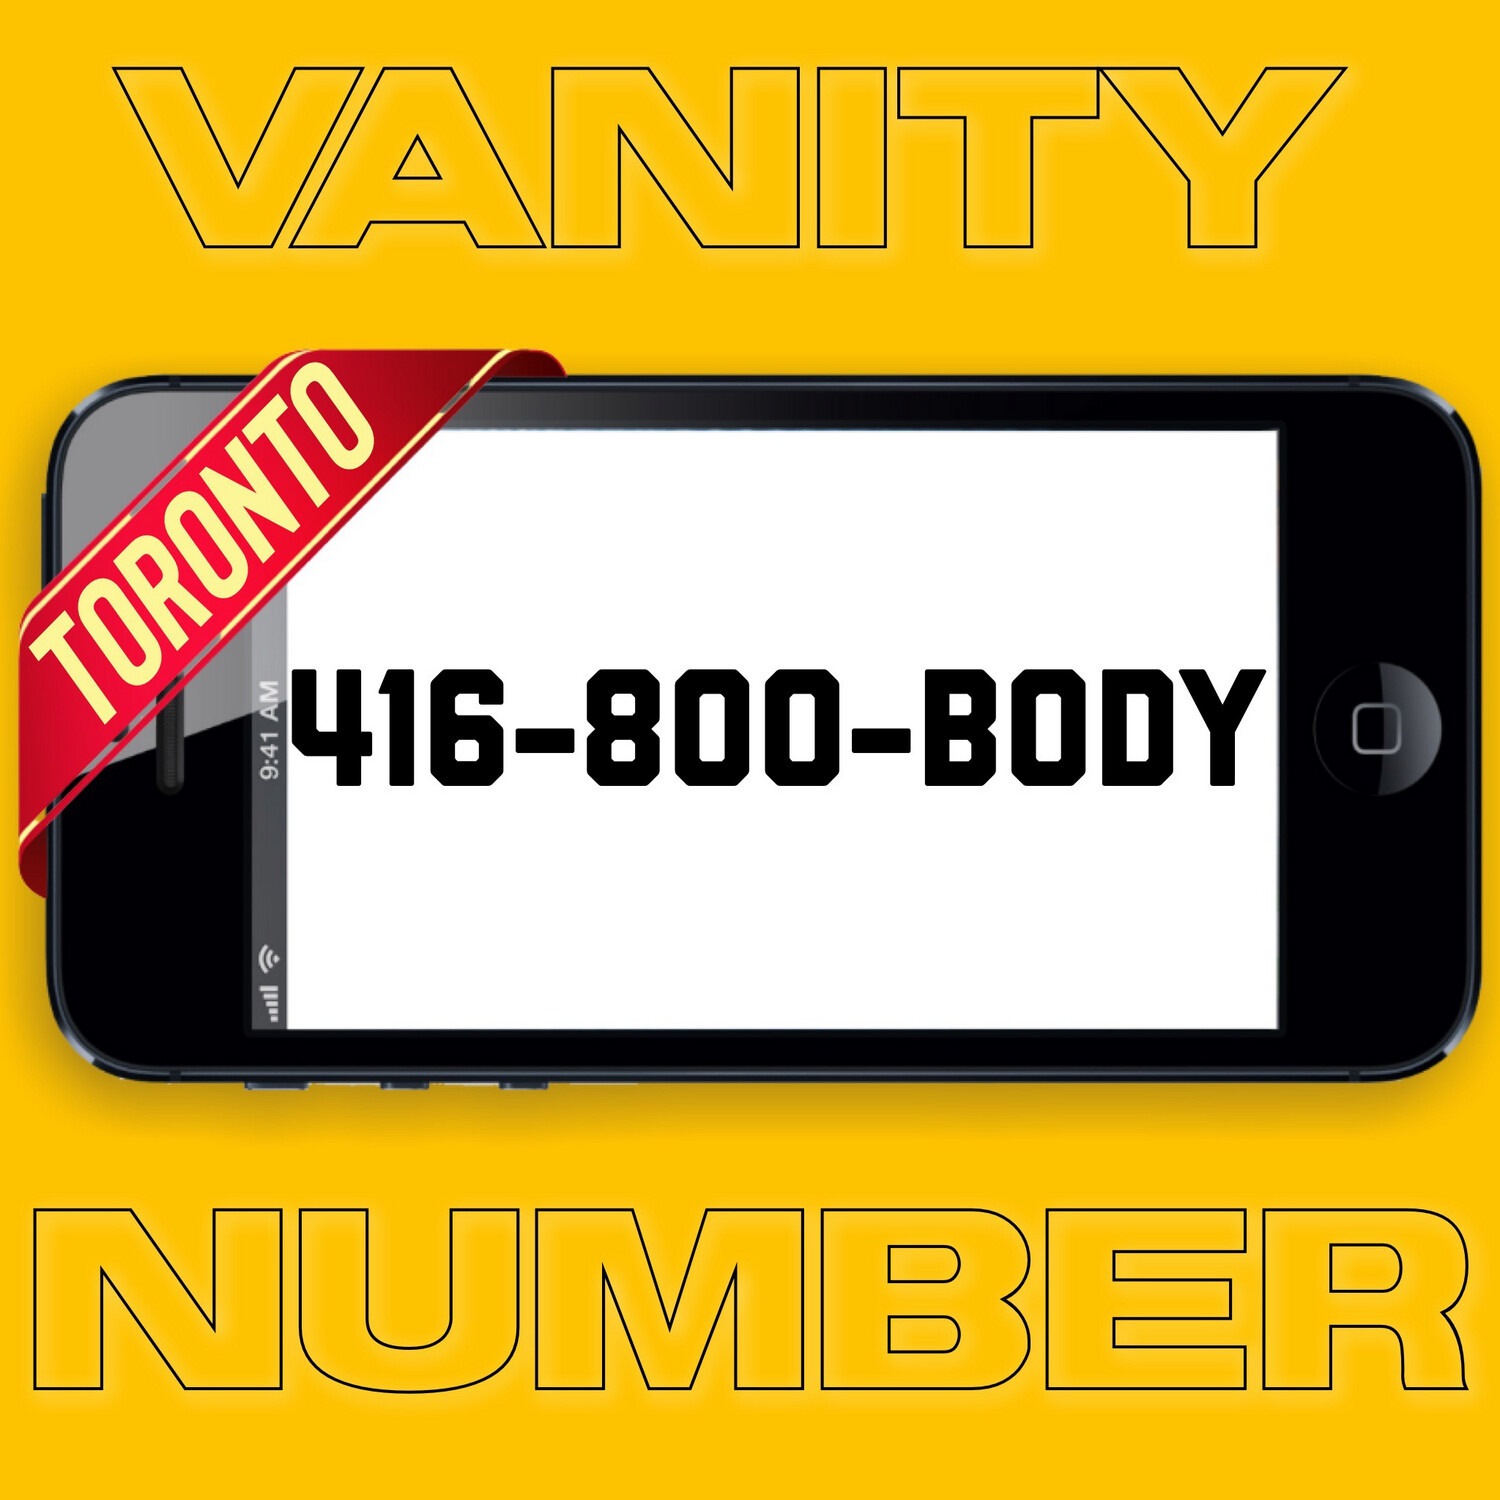 416-800-BODY VANITY NUMBER TORONTO